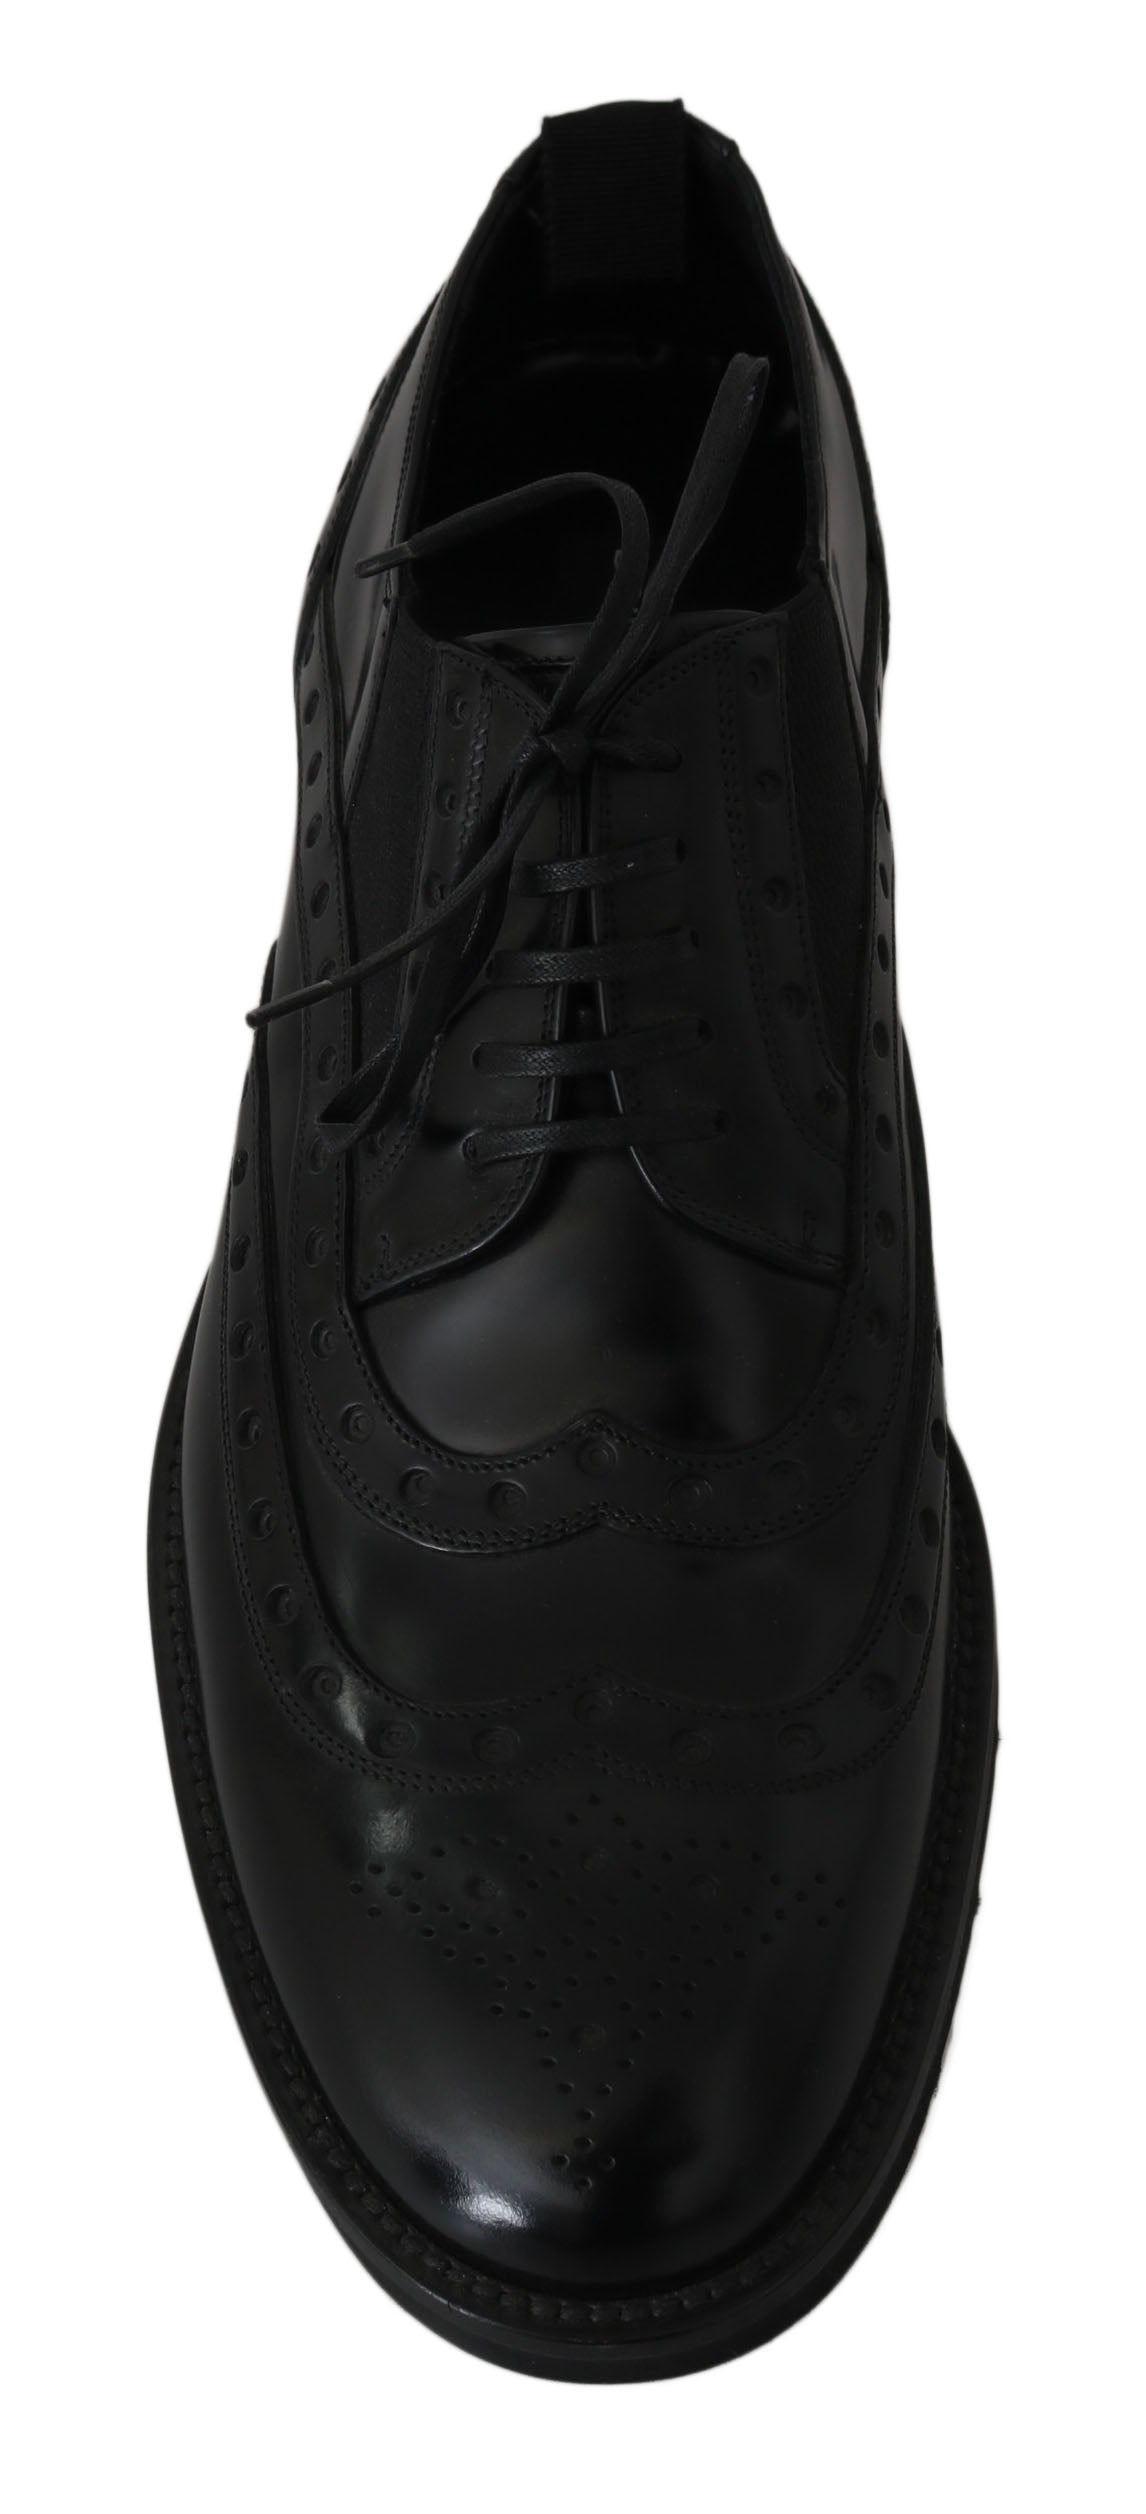 Black Leather Dress Derby Wingtip Shoes